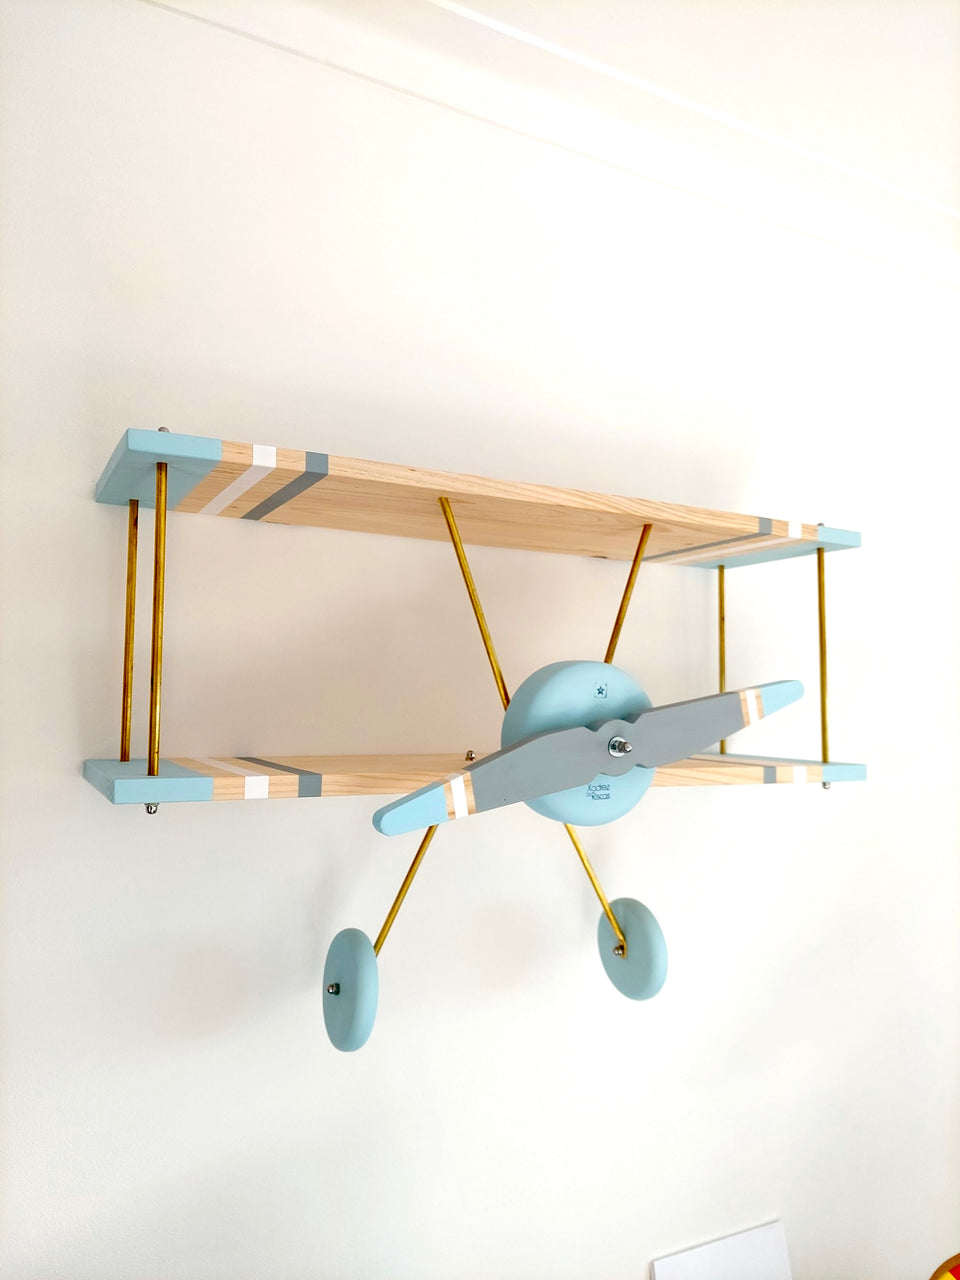 Prateleira Avioneta Cinza/ Azul - Gray/Blue Airplane Shelf